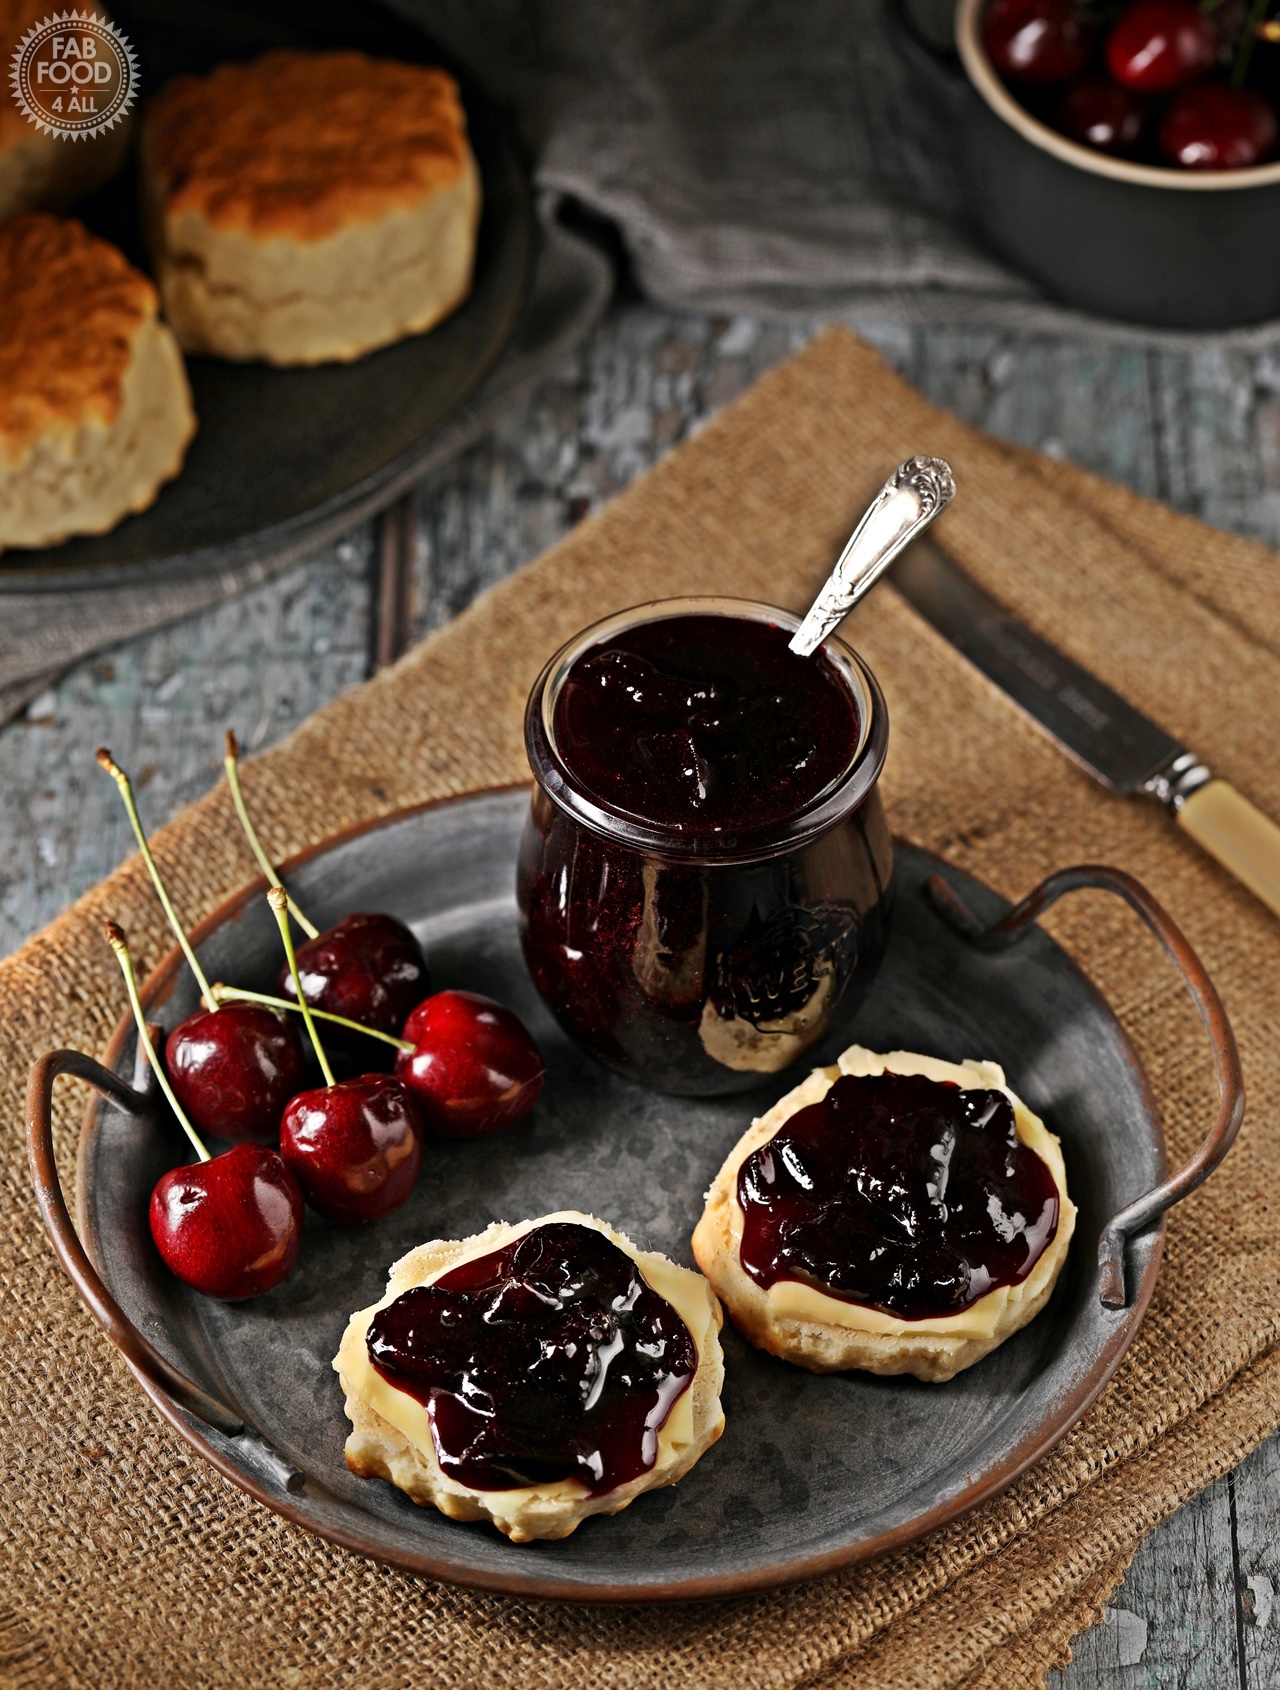 Cherry Jam with scones and cherries.